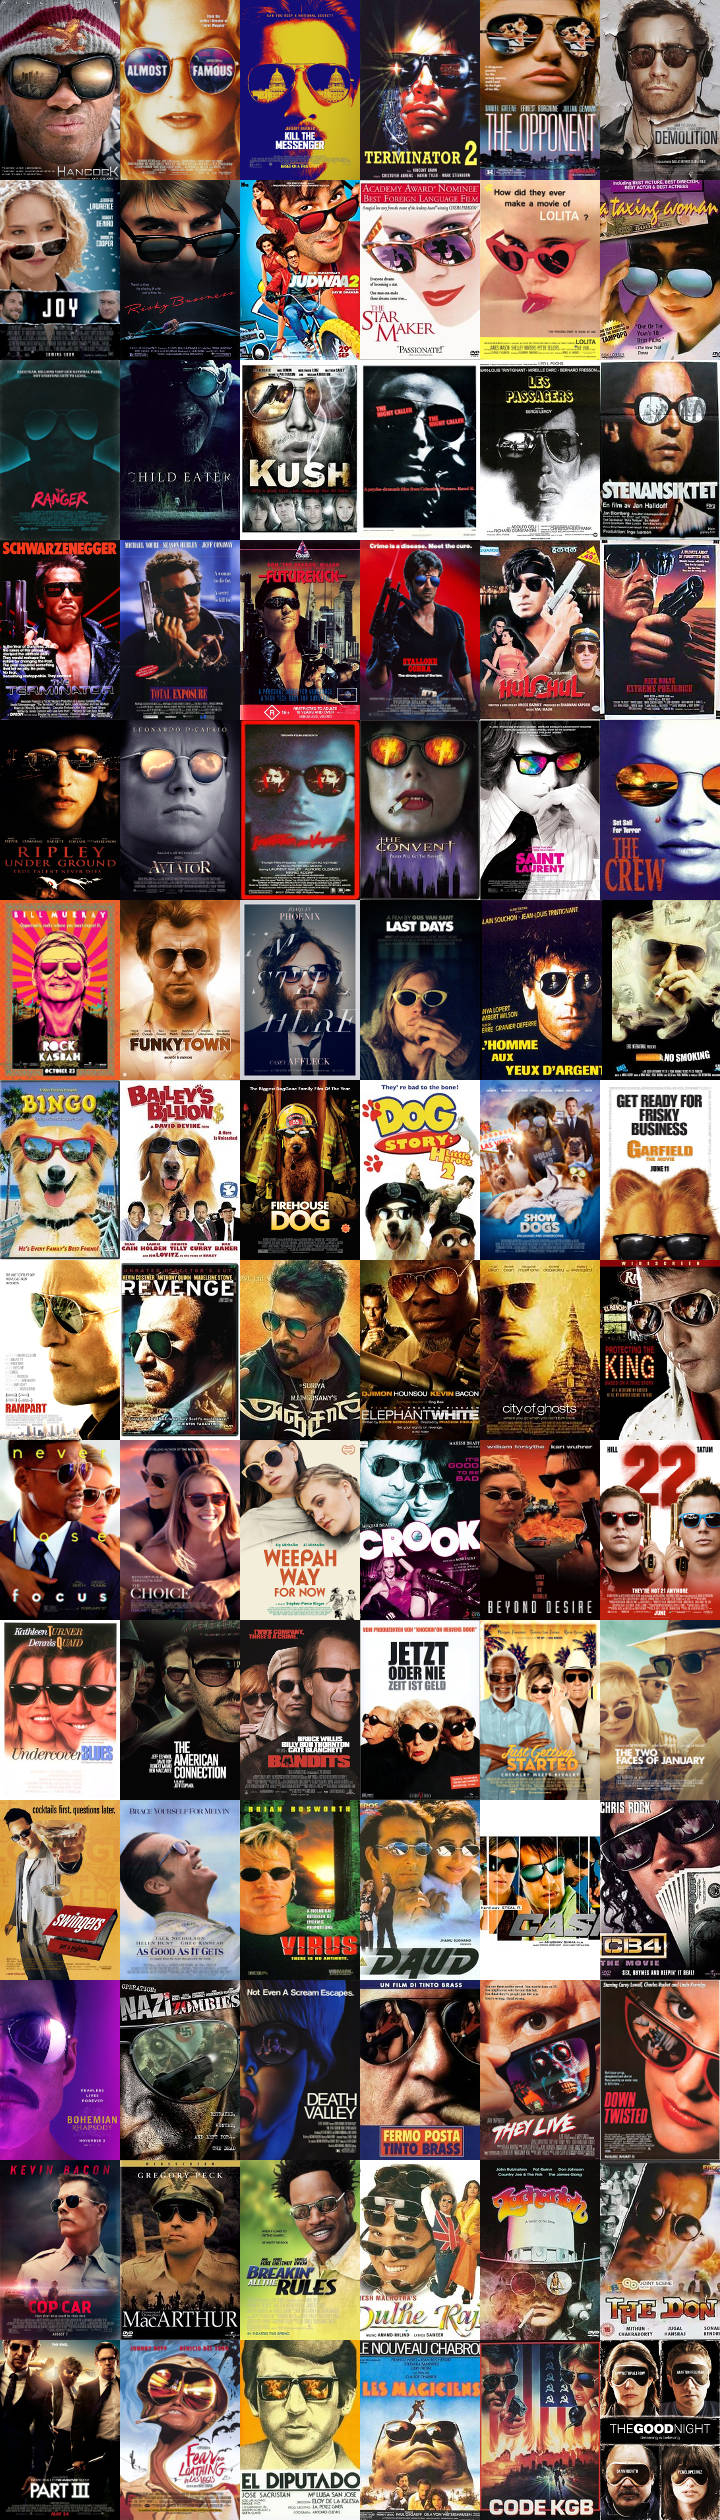 similar movie posters - sunglasses